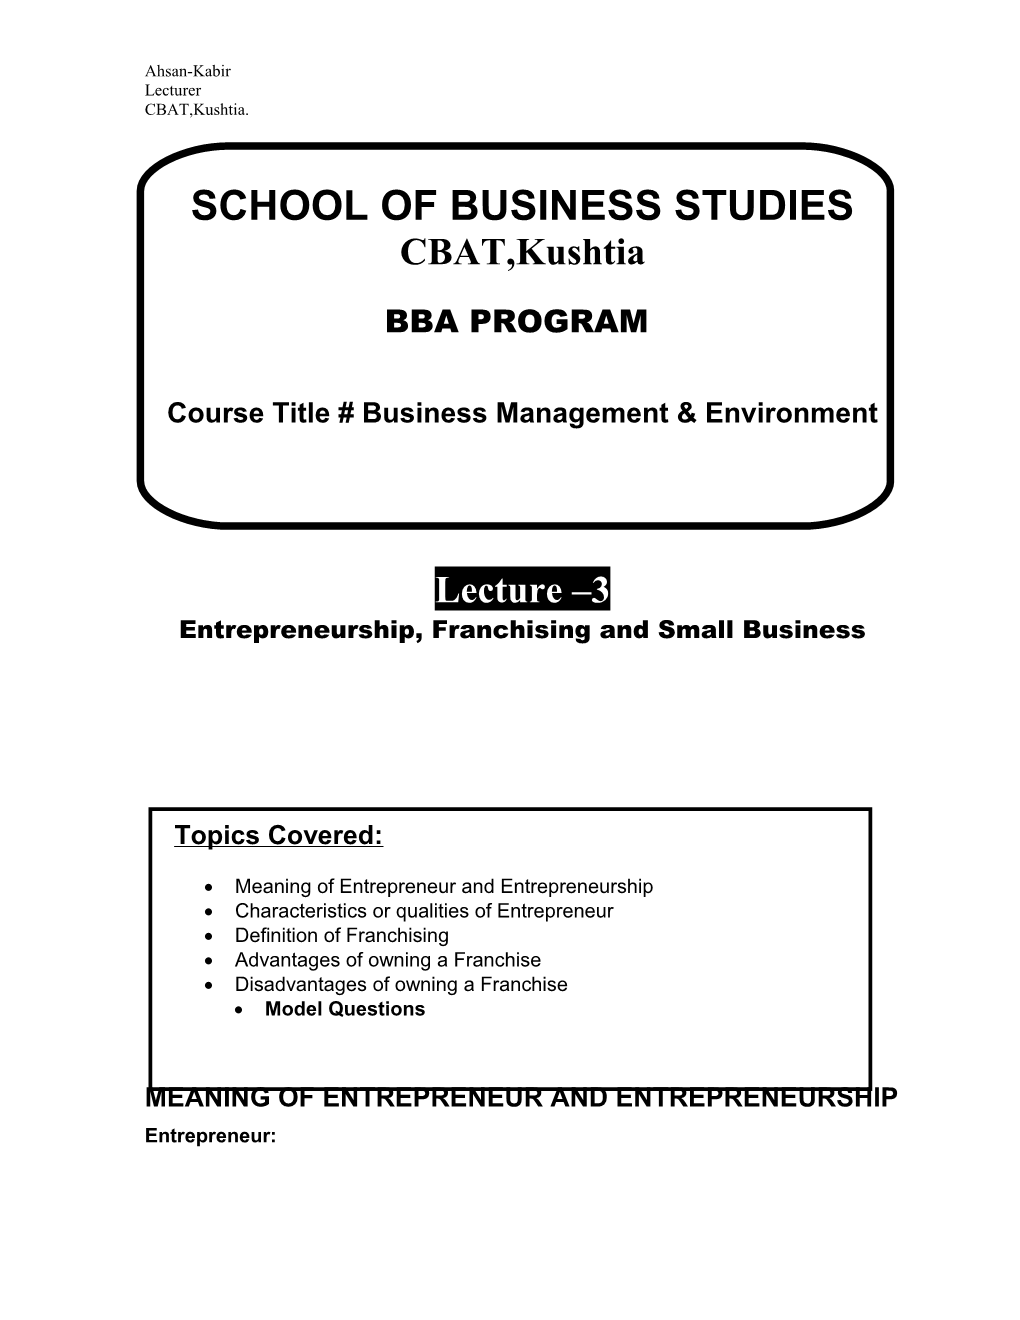 Course Title # Business Management & Environment